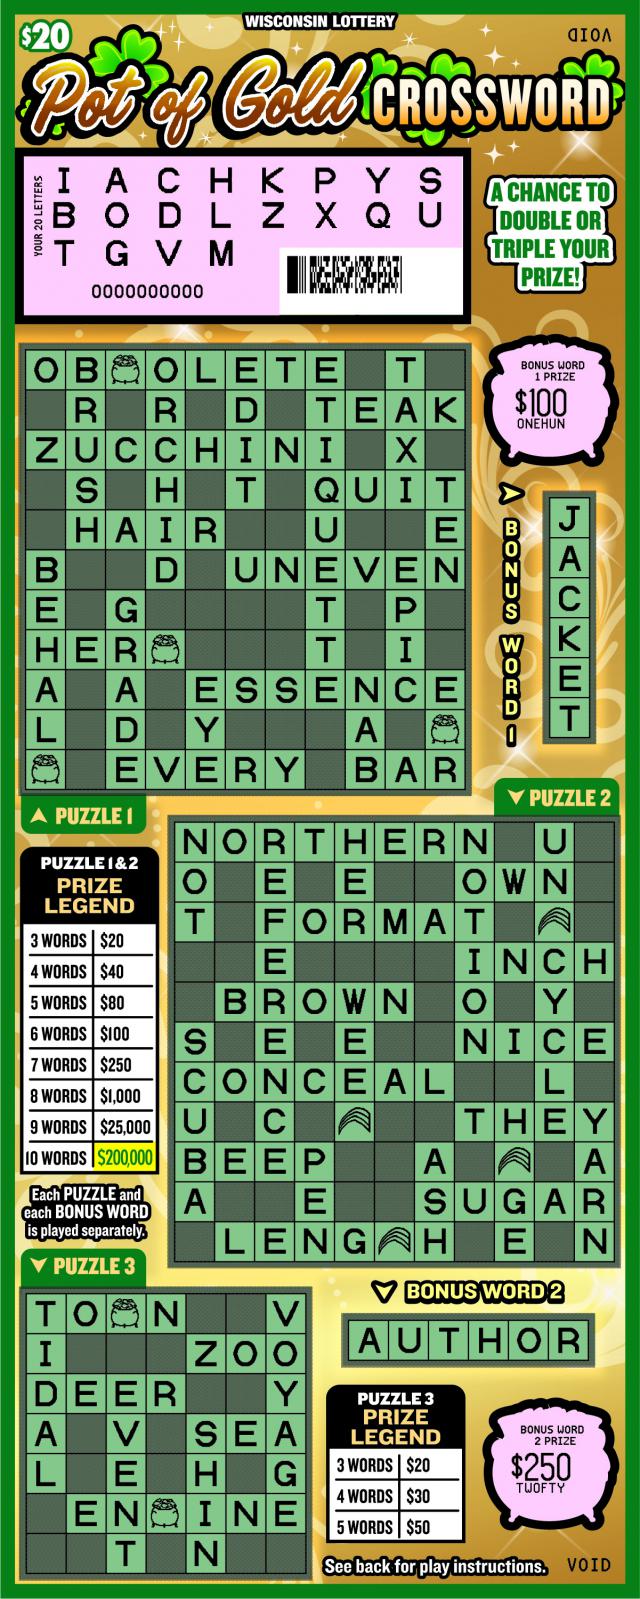 Pot Of Gold Crossword (2118) Wisconsin Lottery